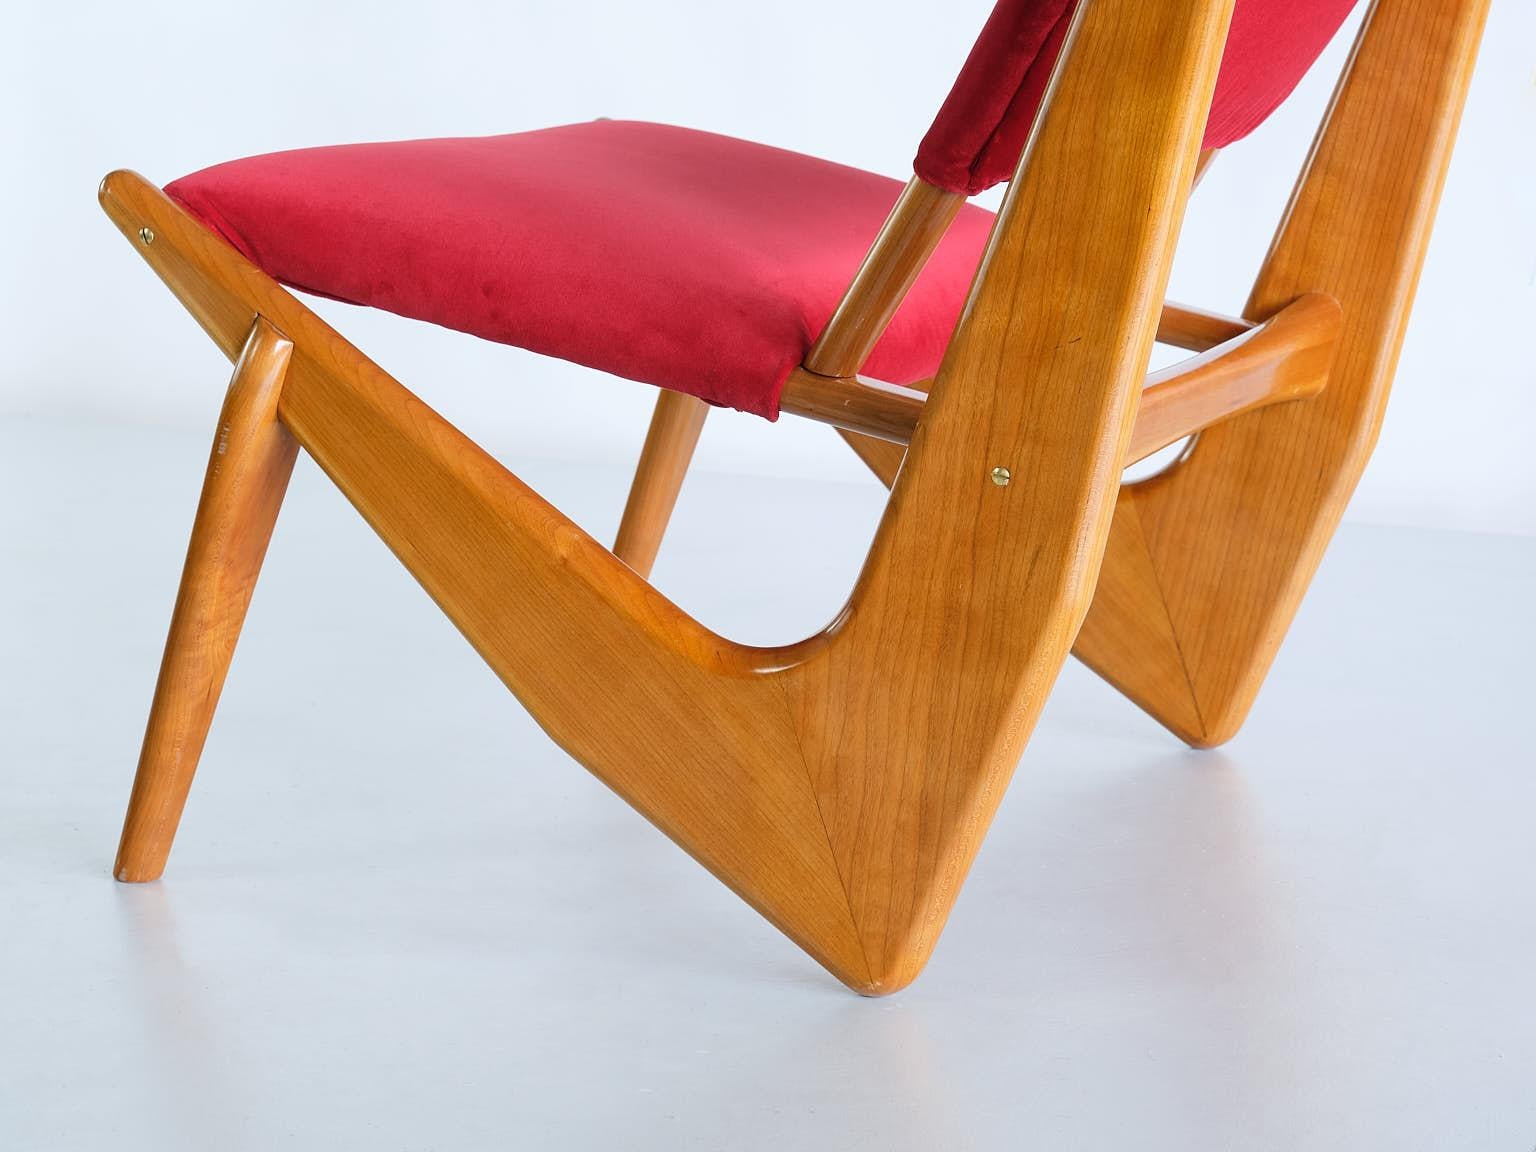 Bertil Behrman Lounge Chair in Oak and Velvet, Engen Möbelfabriker, Sweden, 1956 For Sale 2